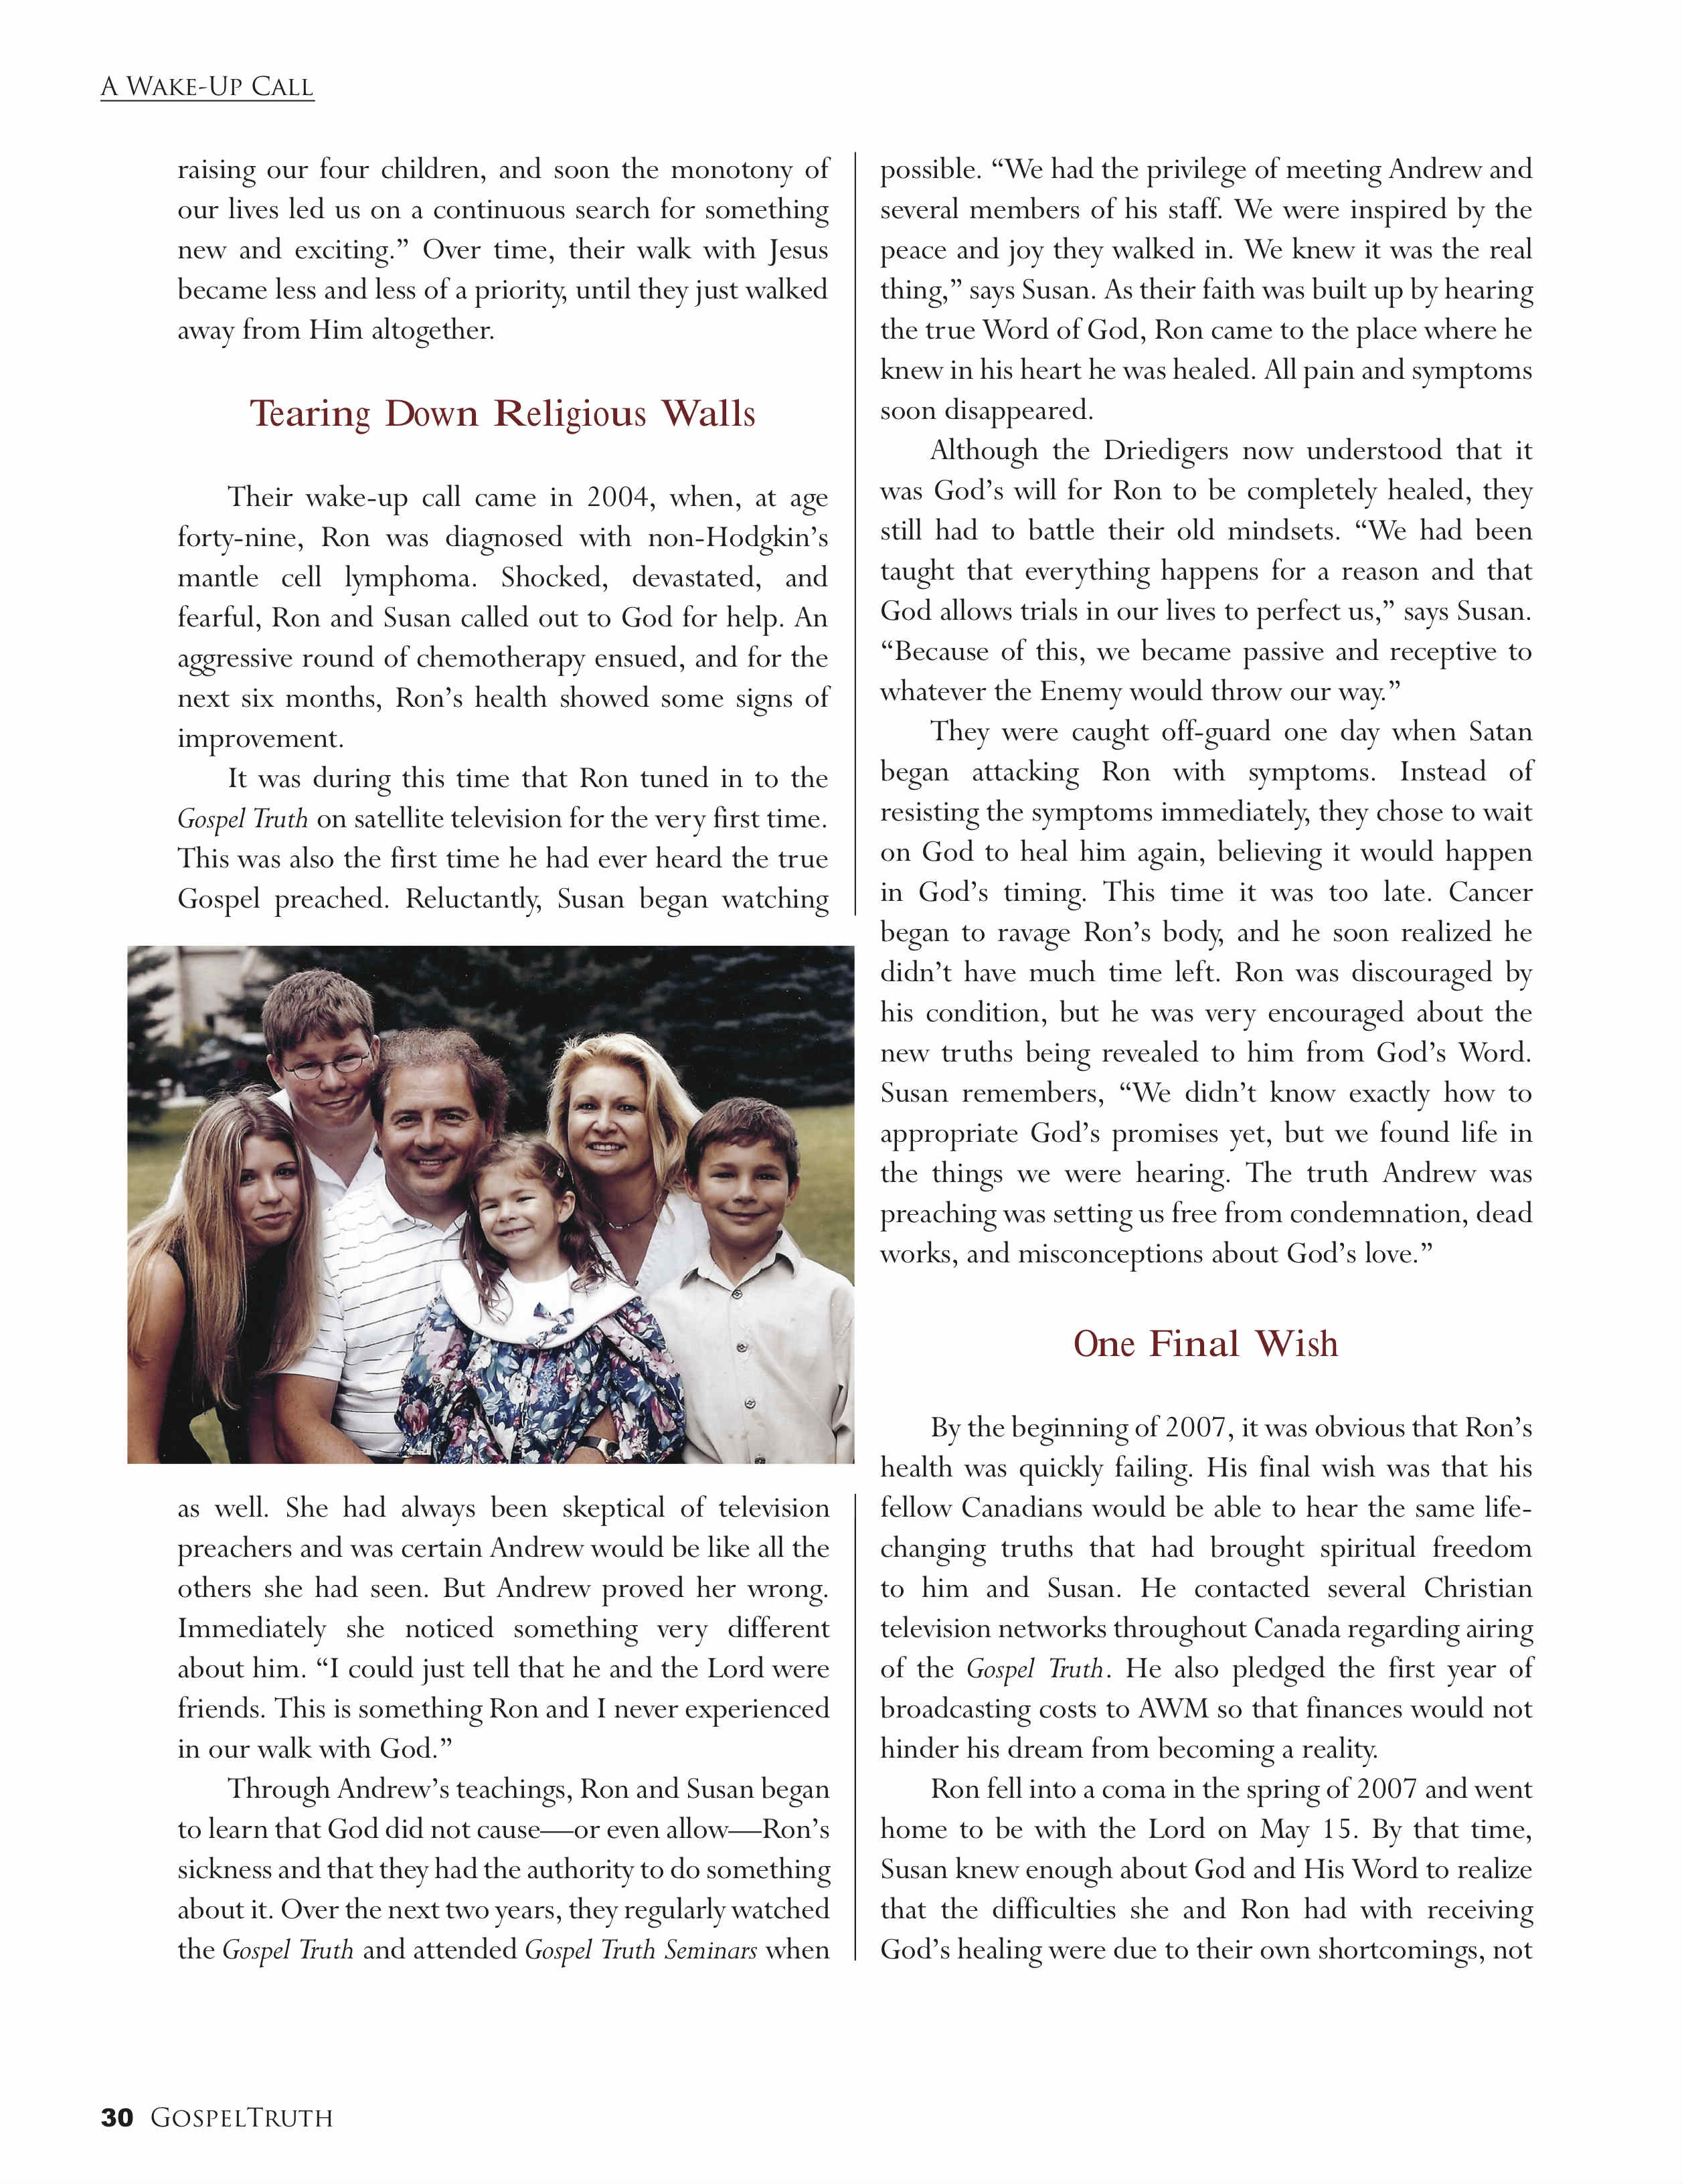 A Wake Up Call | Gospel Truth Magazine Spring/Summer 2009 | P 30